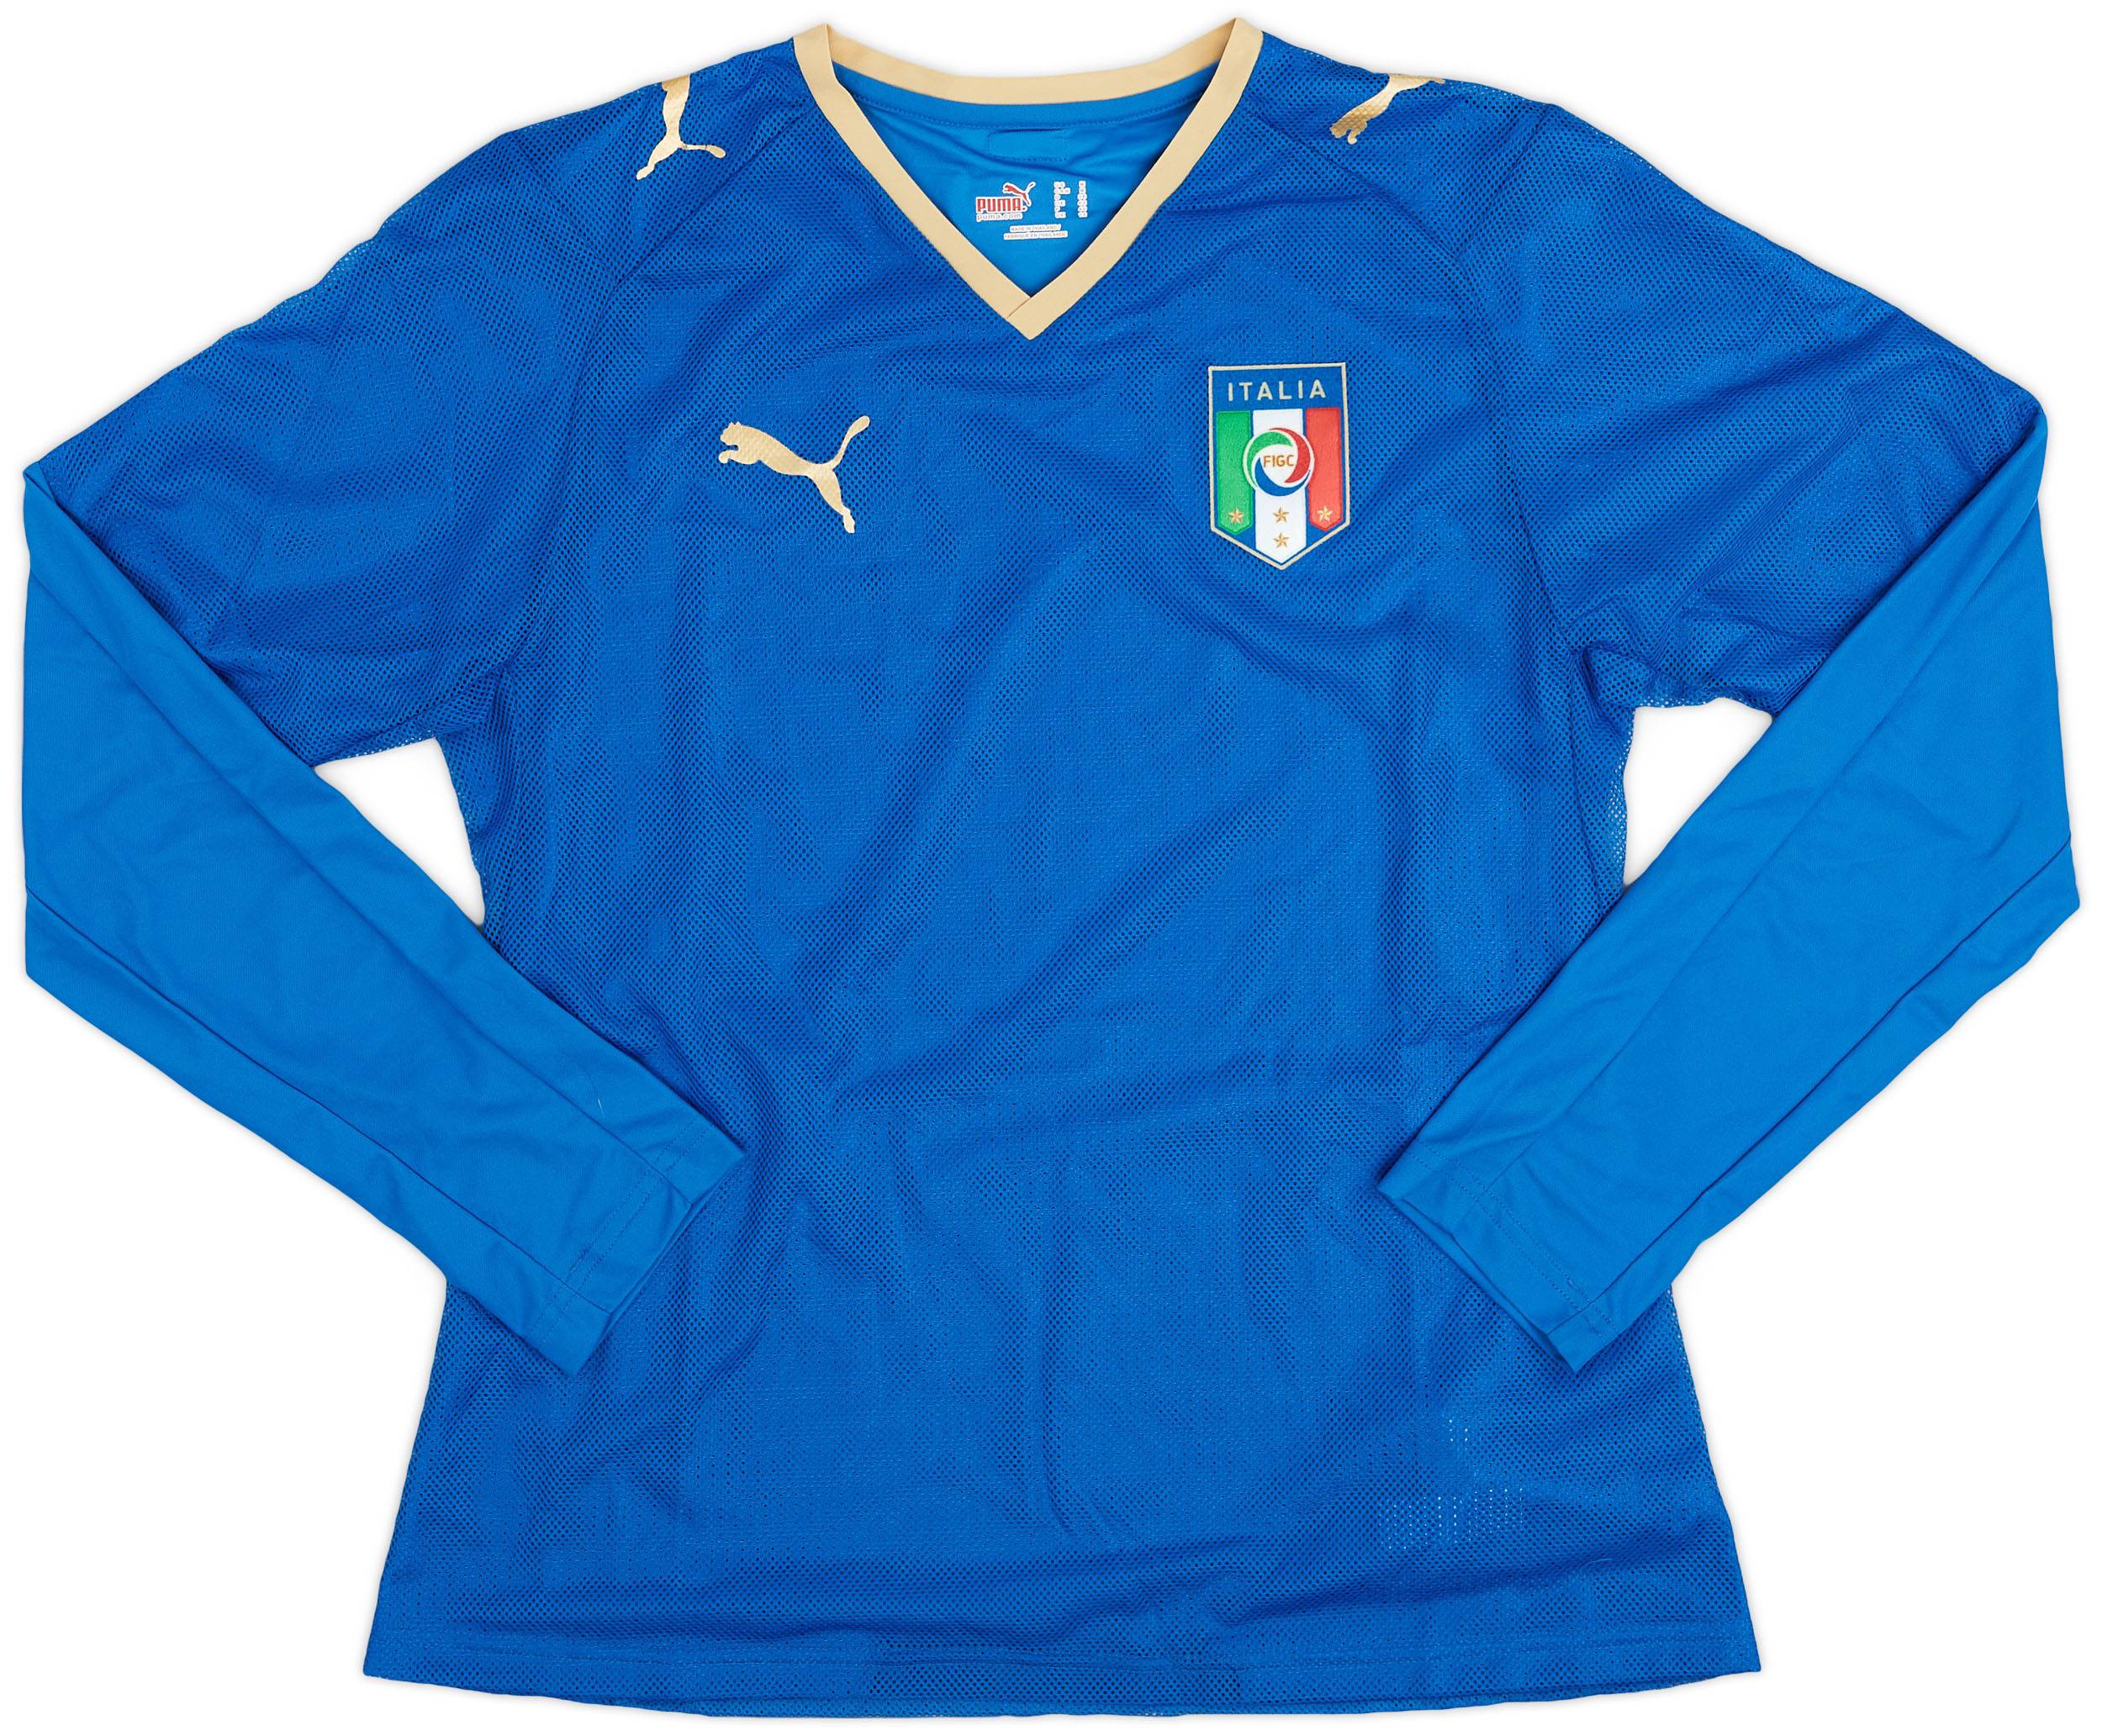 2007-08 Italy Home L/S Shirt - 9/10 - (Women's M)